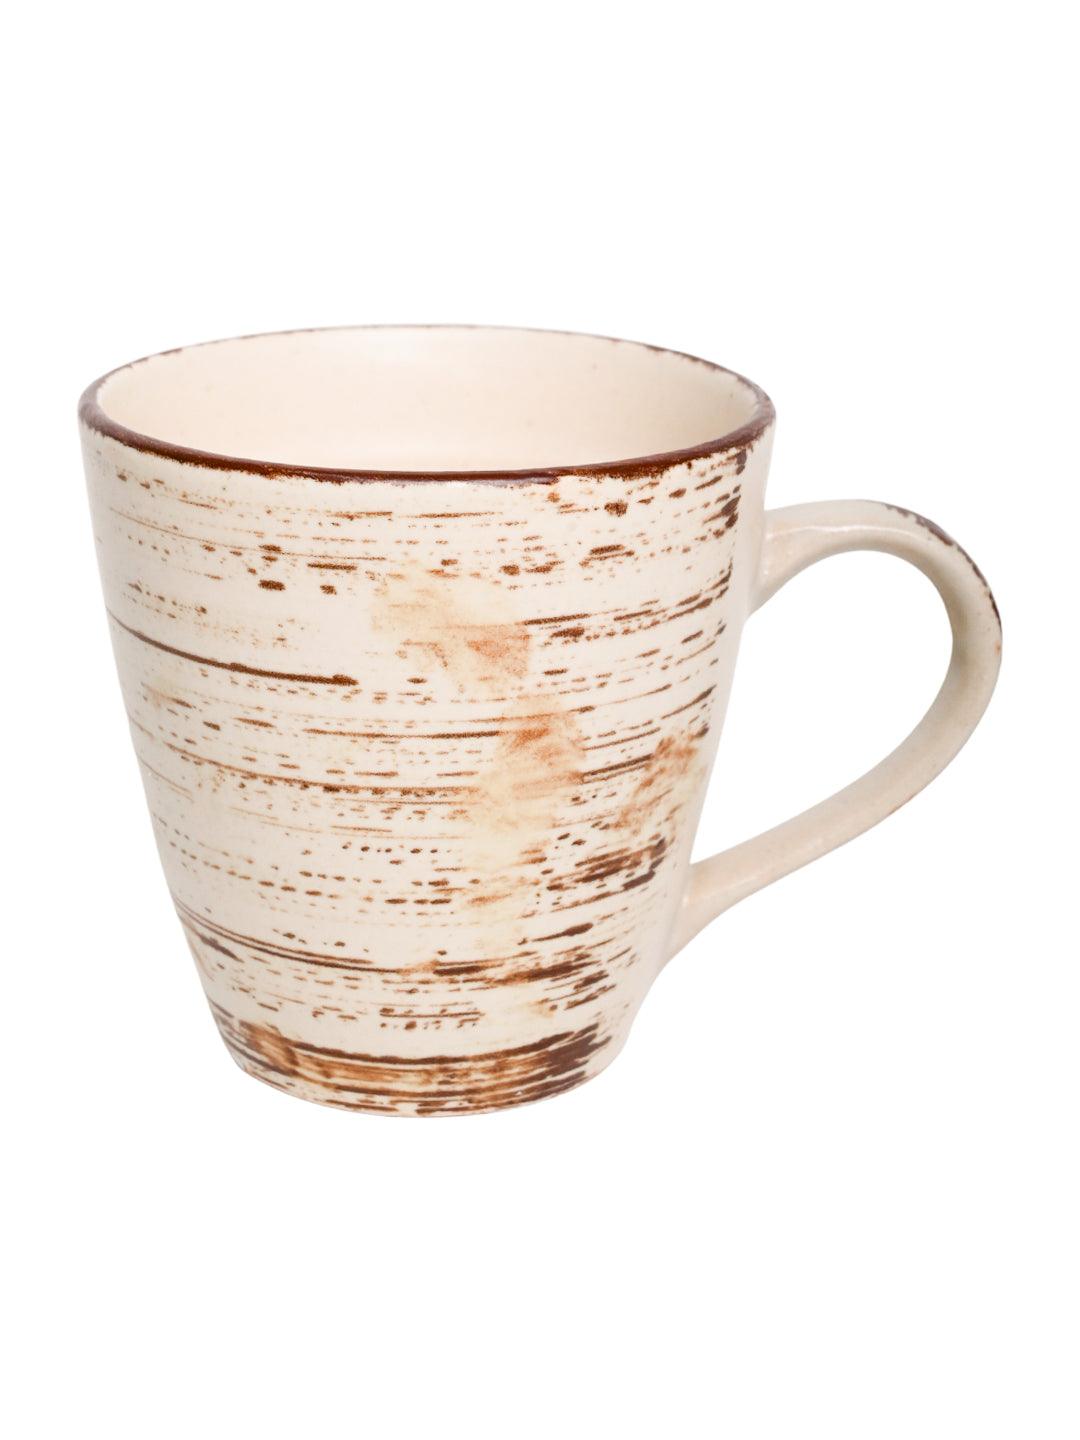 VON CASA Ceramic Mug - 330Ml, Cream - MARKET 99